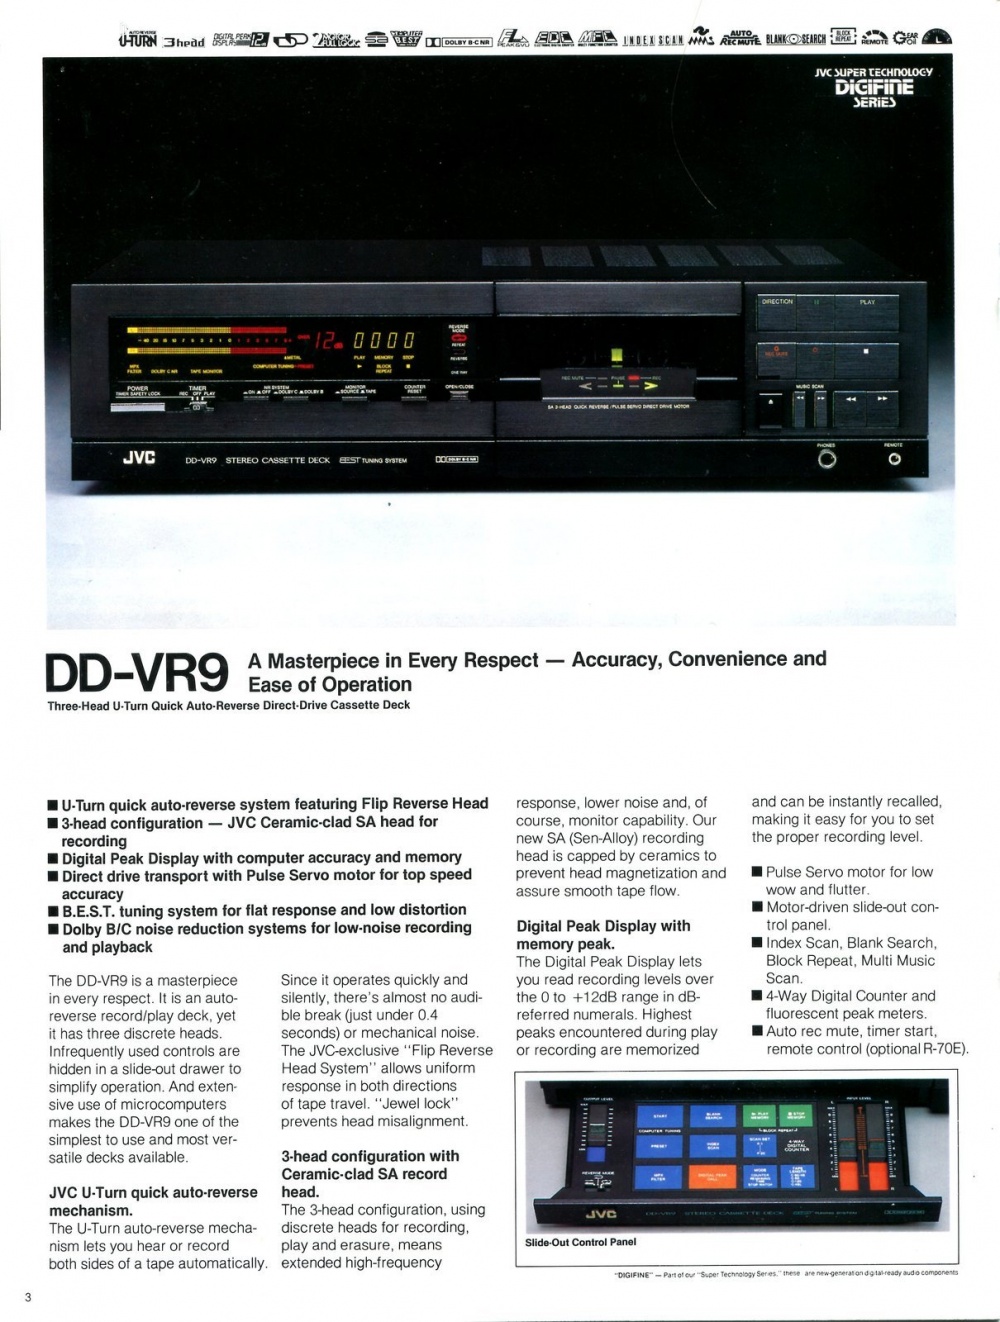 JVC DD-VR 9-Prospekt-1.jpg